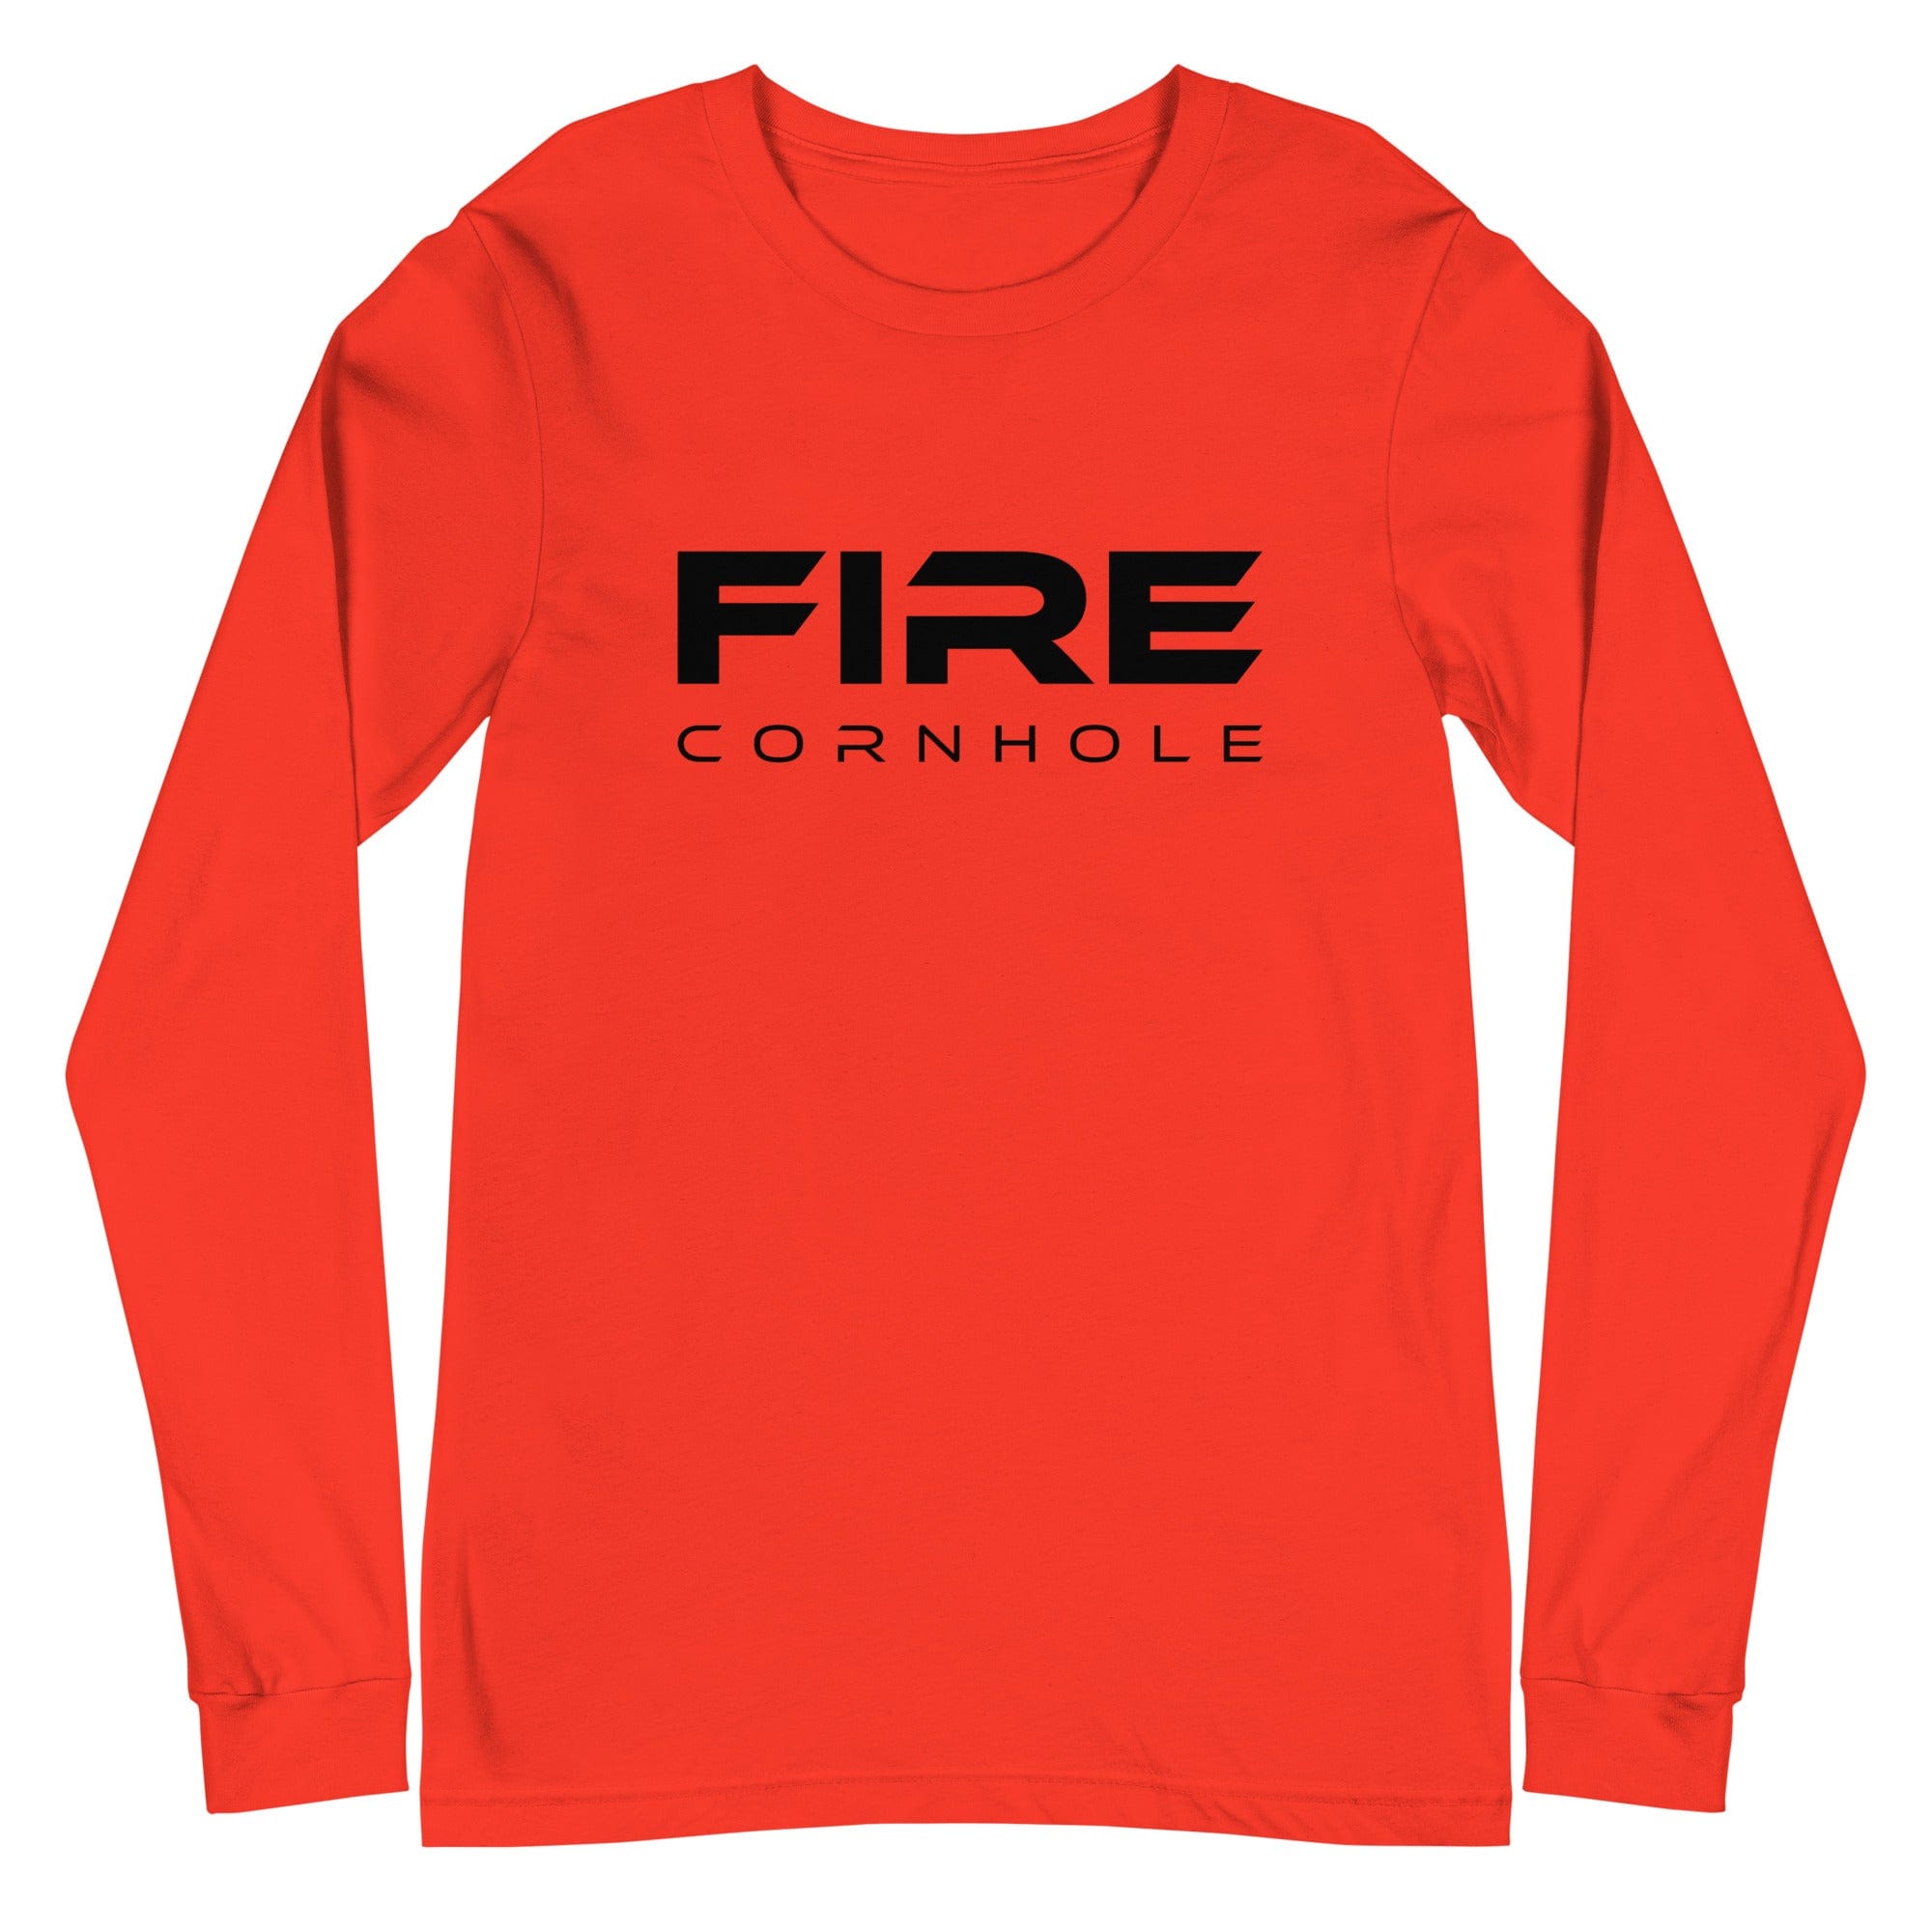 Orange unisex cotton longsleeve shirt with Fire Cornhole logo in black